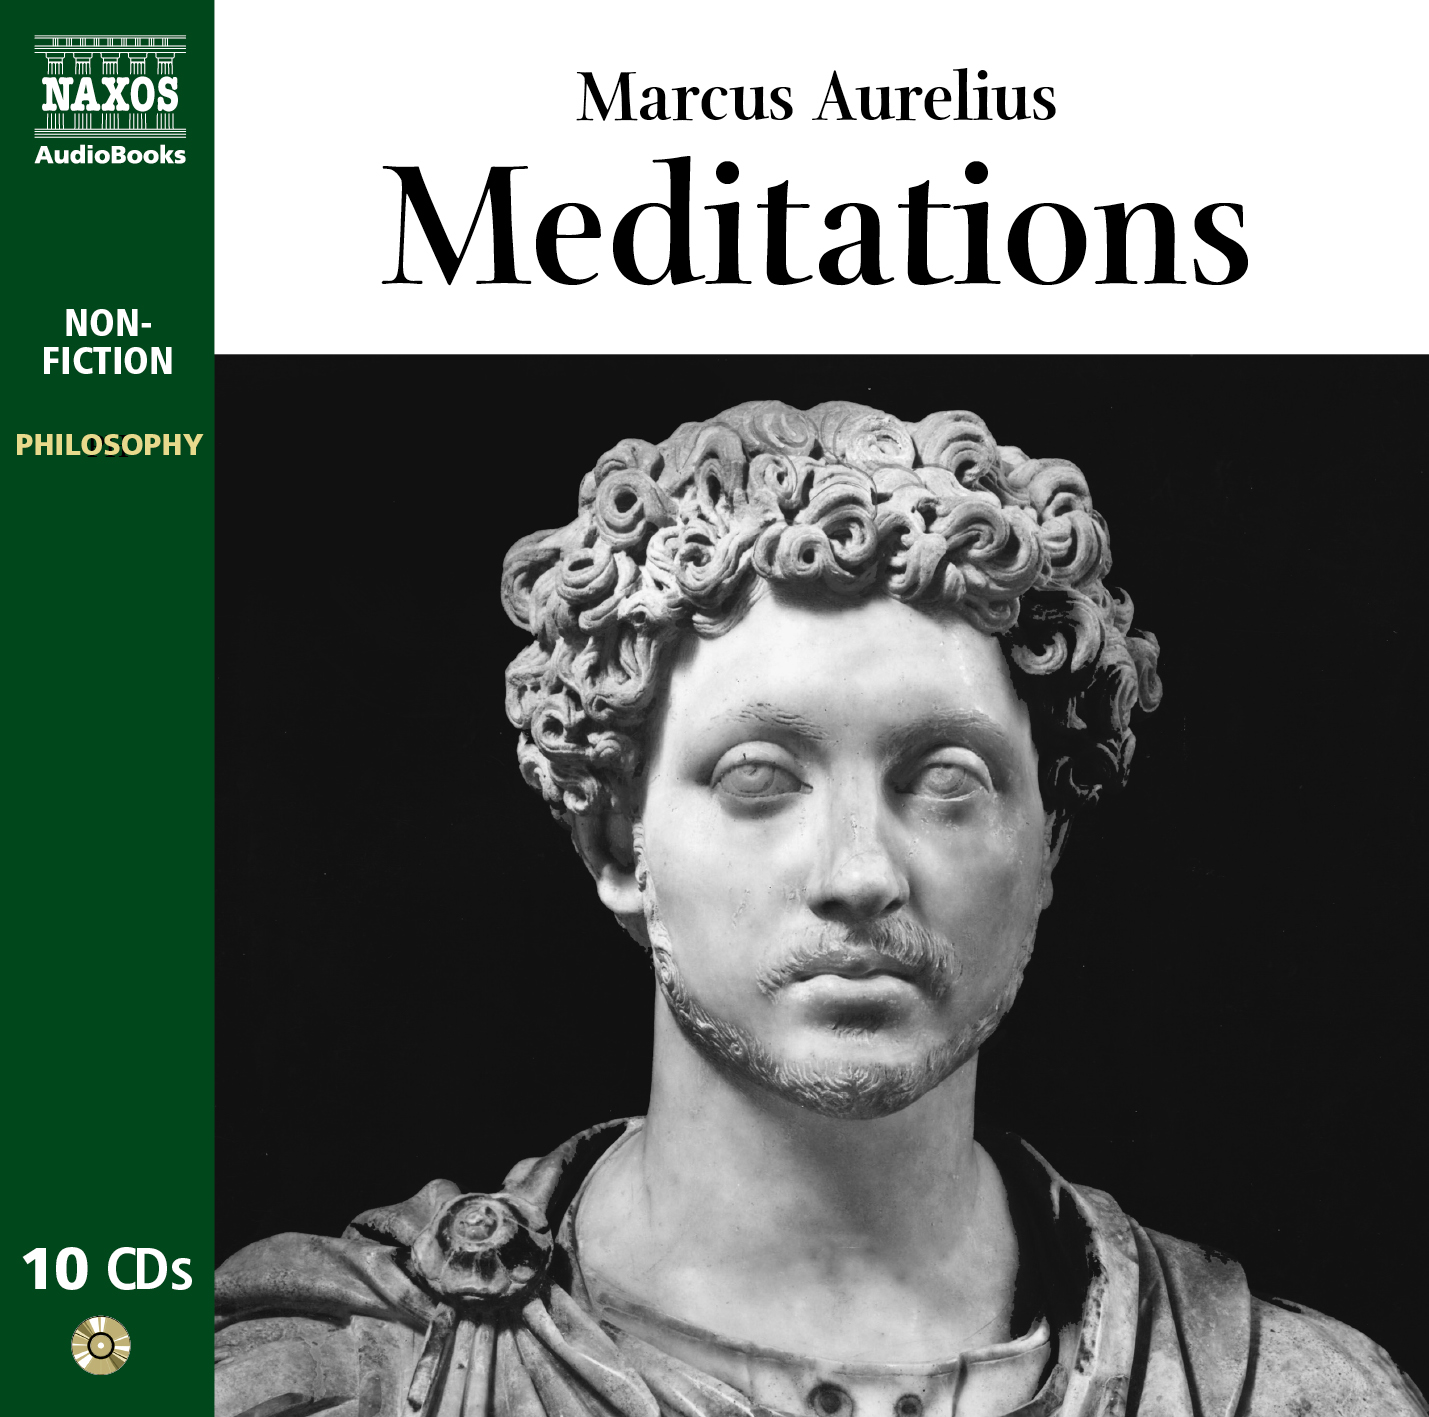 Marcus Aurelius: Meditations (AudiobookFormat, 2011, Naxos AudioBooks)